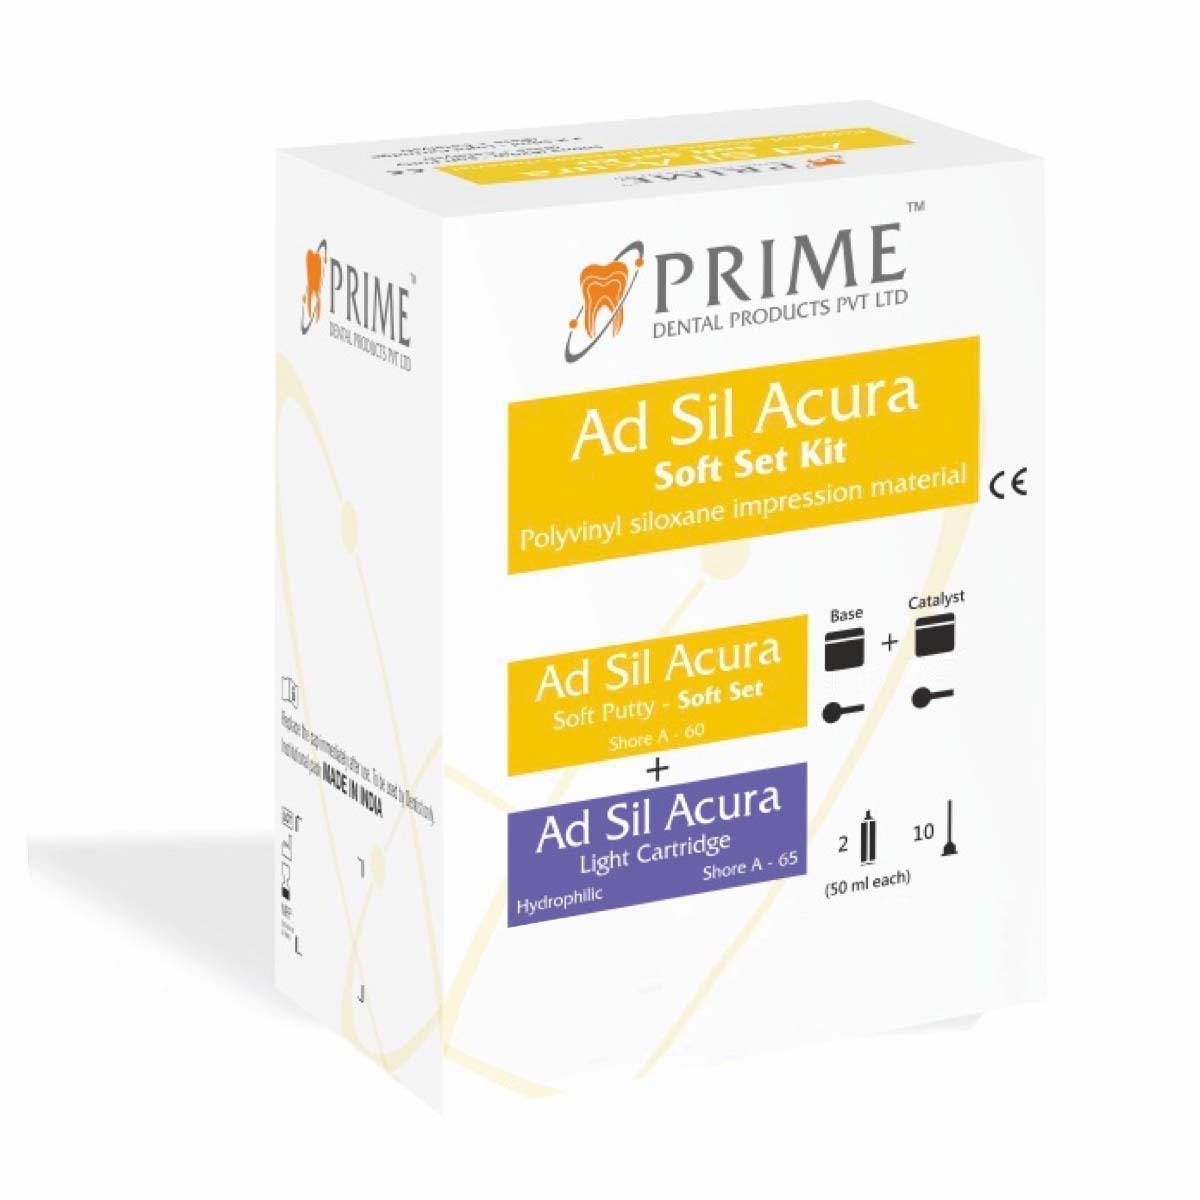 Prime Ad Sil Acura Soft Set Kit